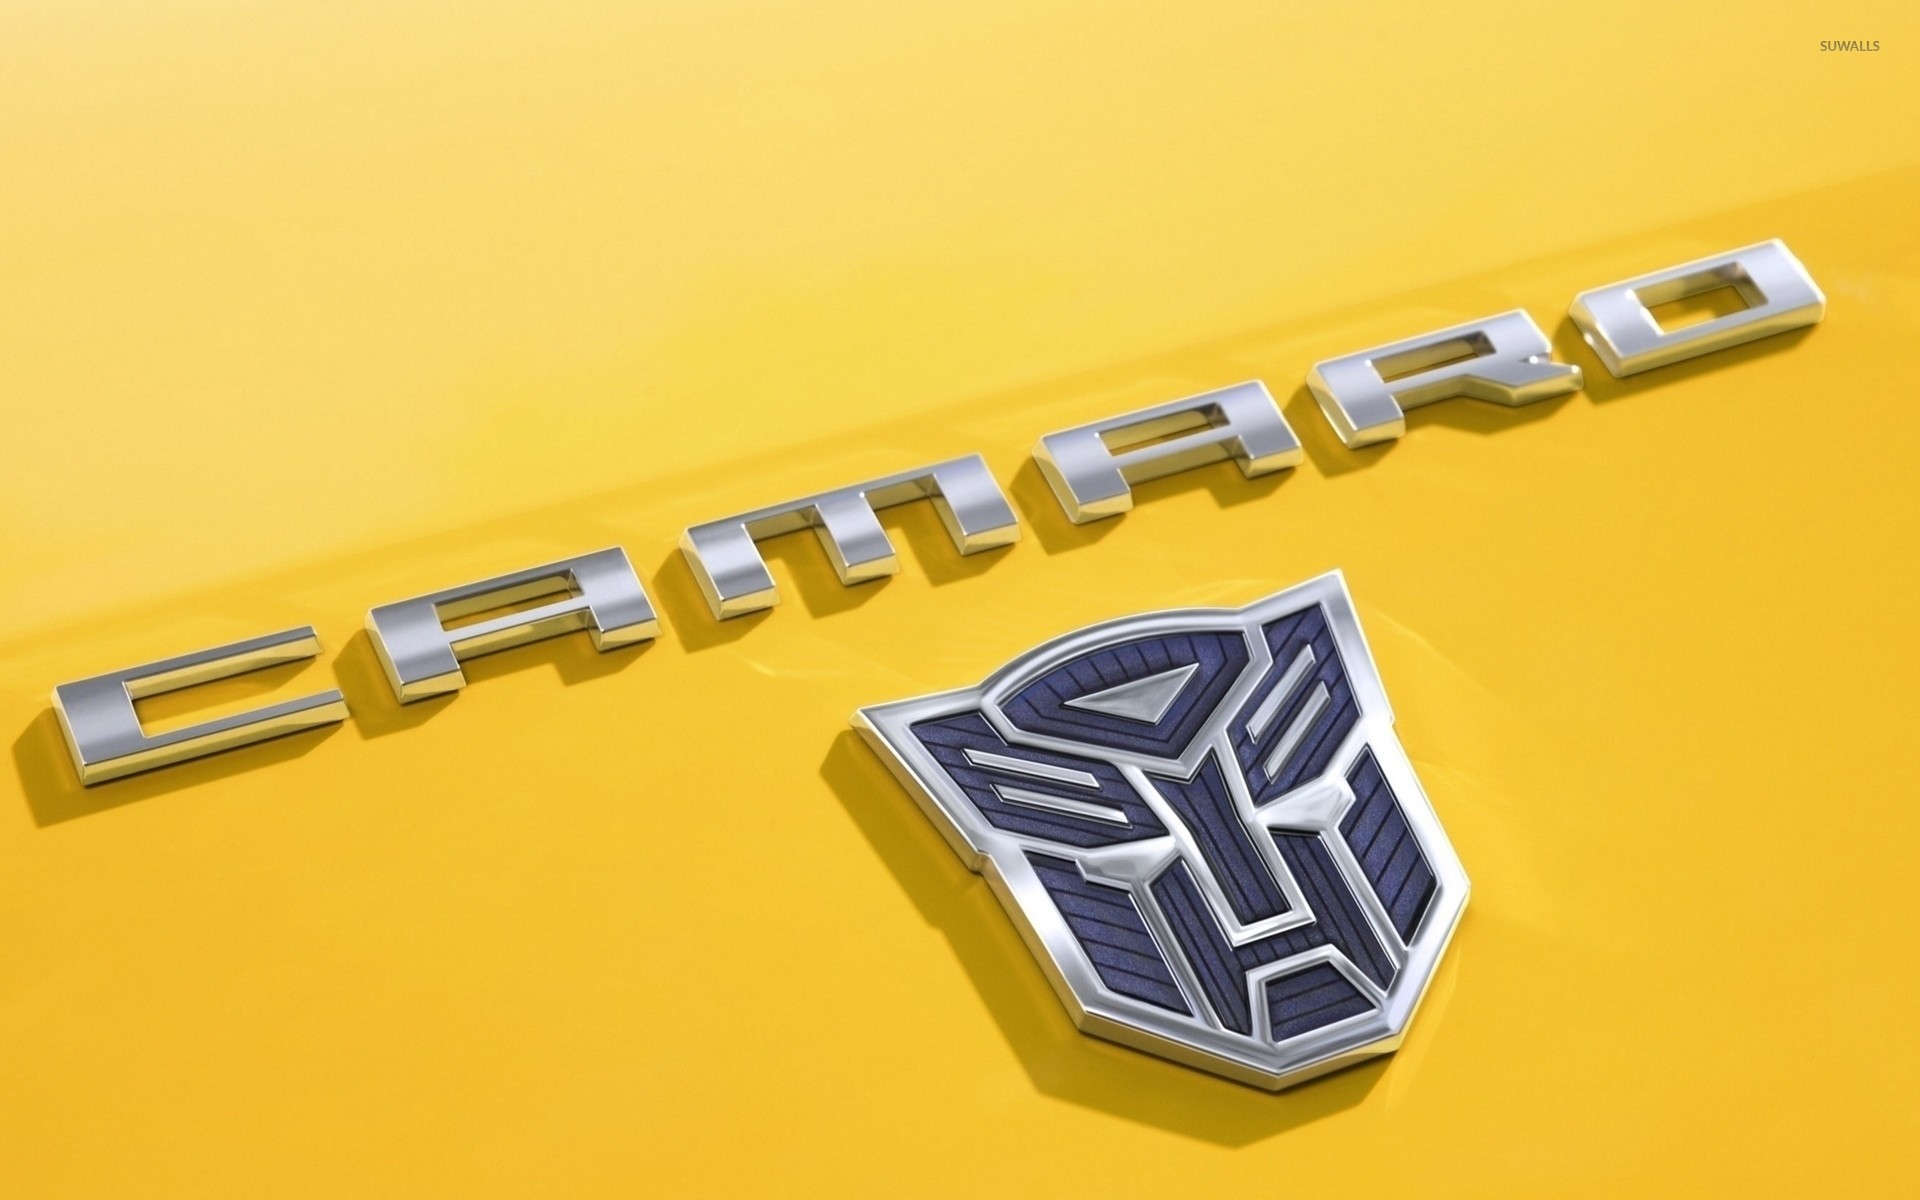 Chevrolet camaro logo in transformers wallpaper car wallpapers. Download Image 1920 X 1200